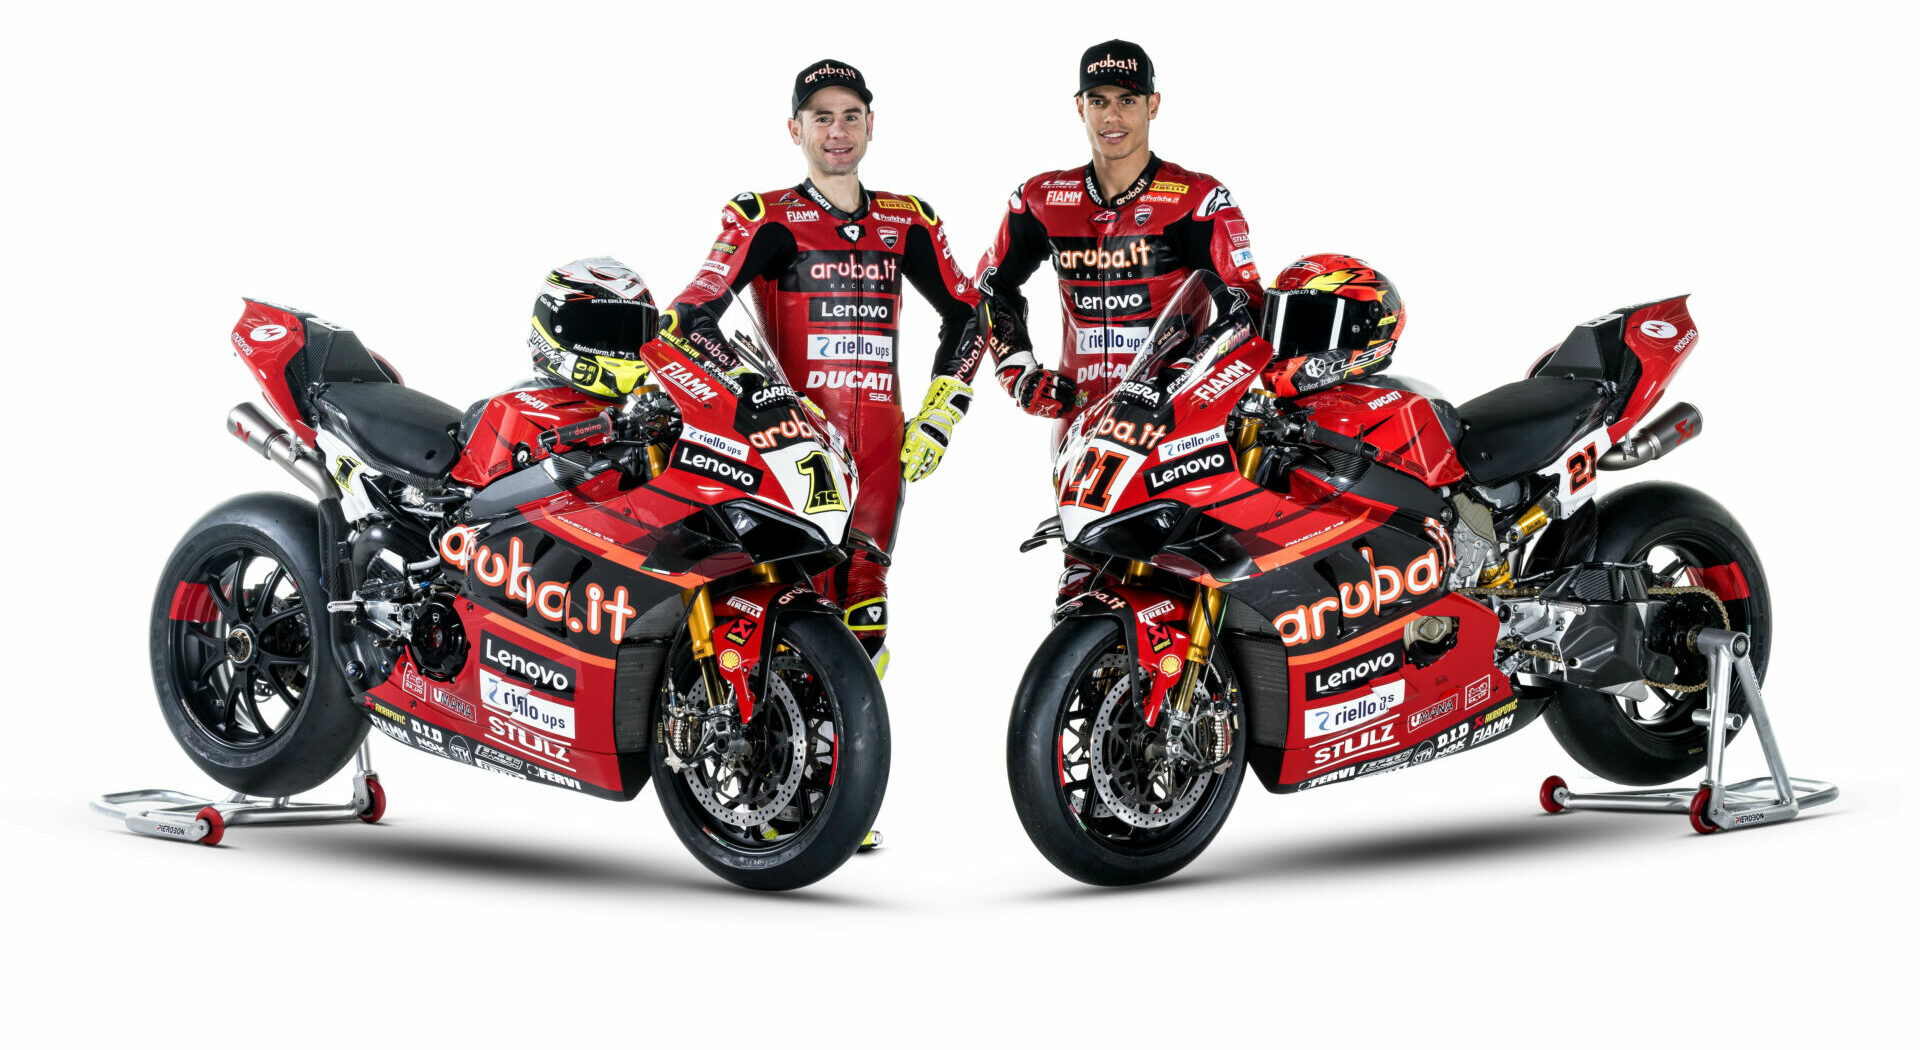 2022 Superbike World Champion Alvaro Bautista (left) and teammate Michael Rinaldi (right) with their Ducati Panigale V4 R Superbikes. Photo courtesy Ducati.